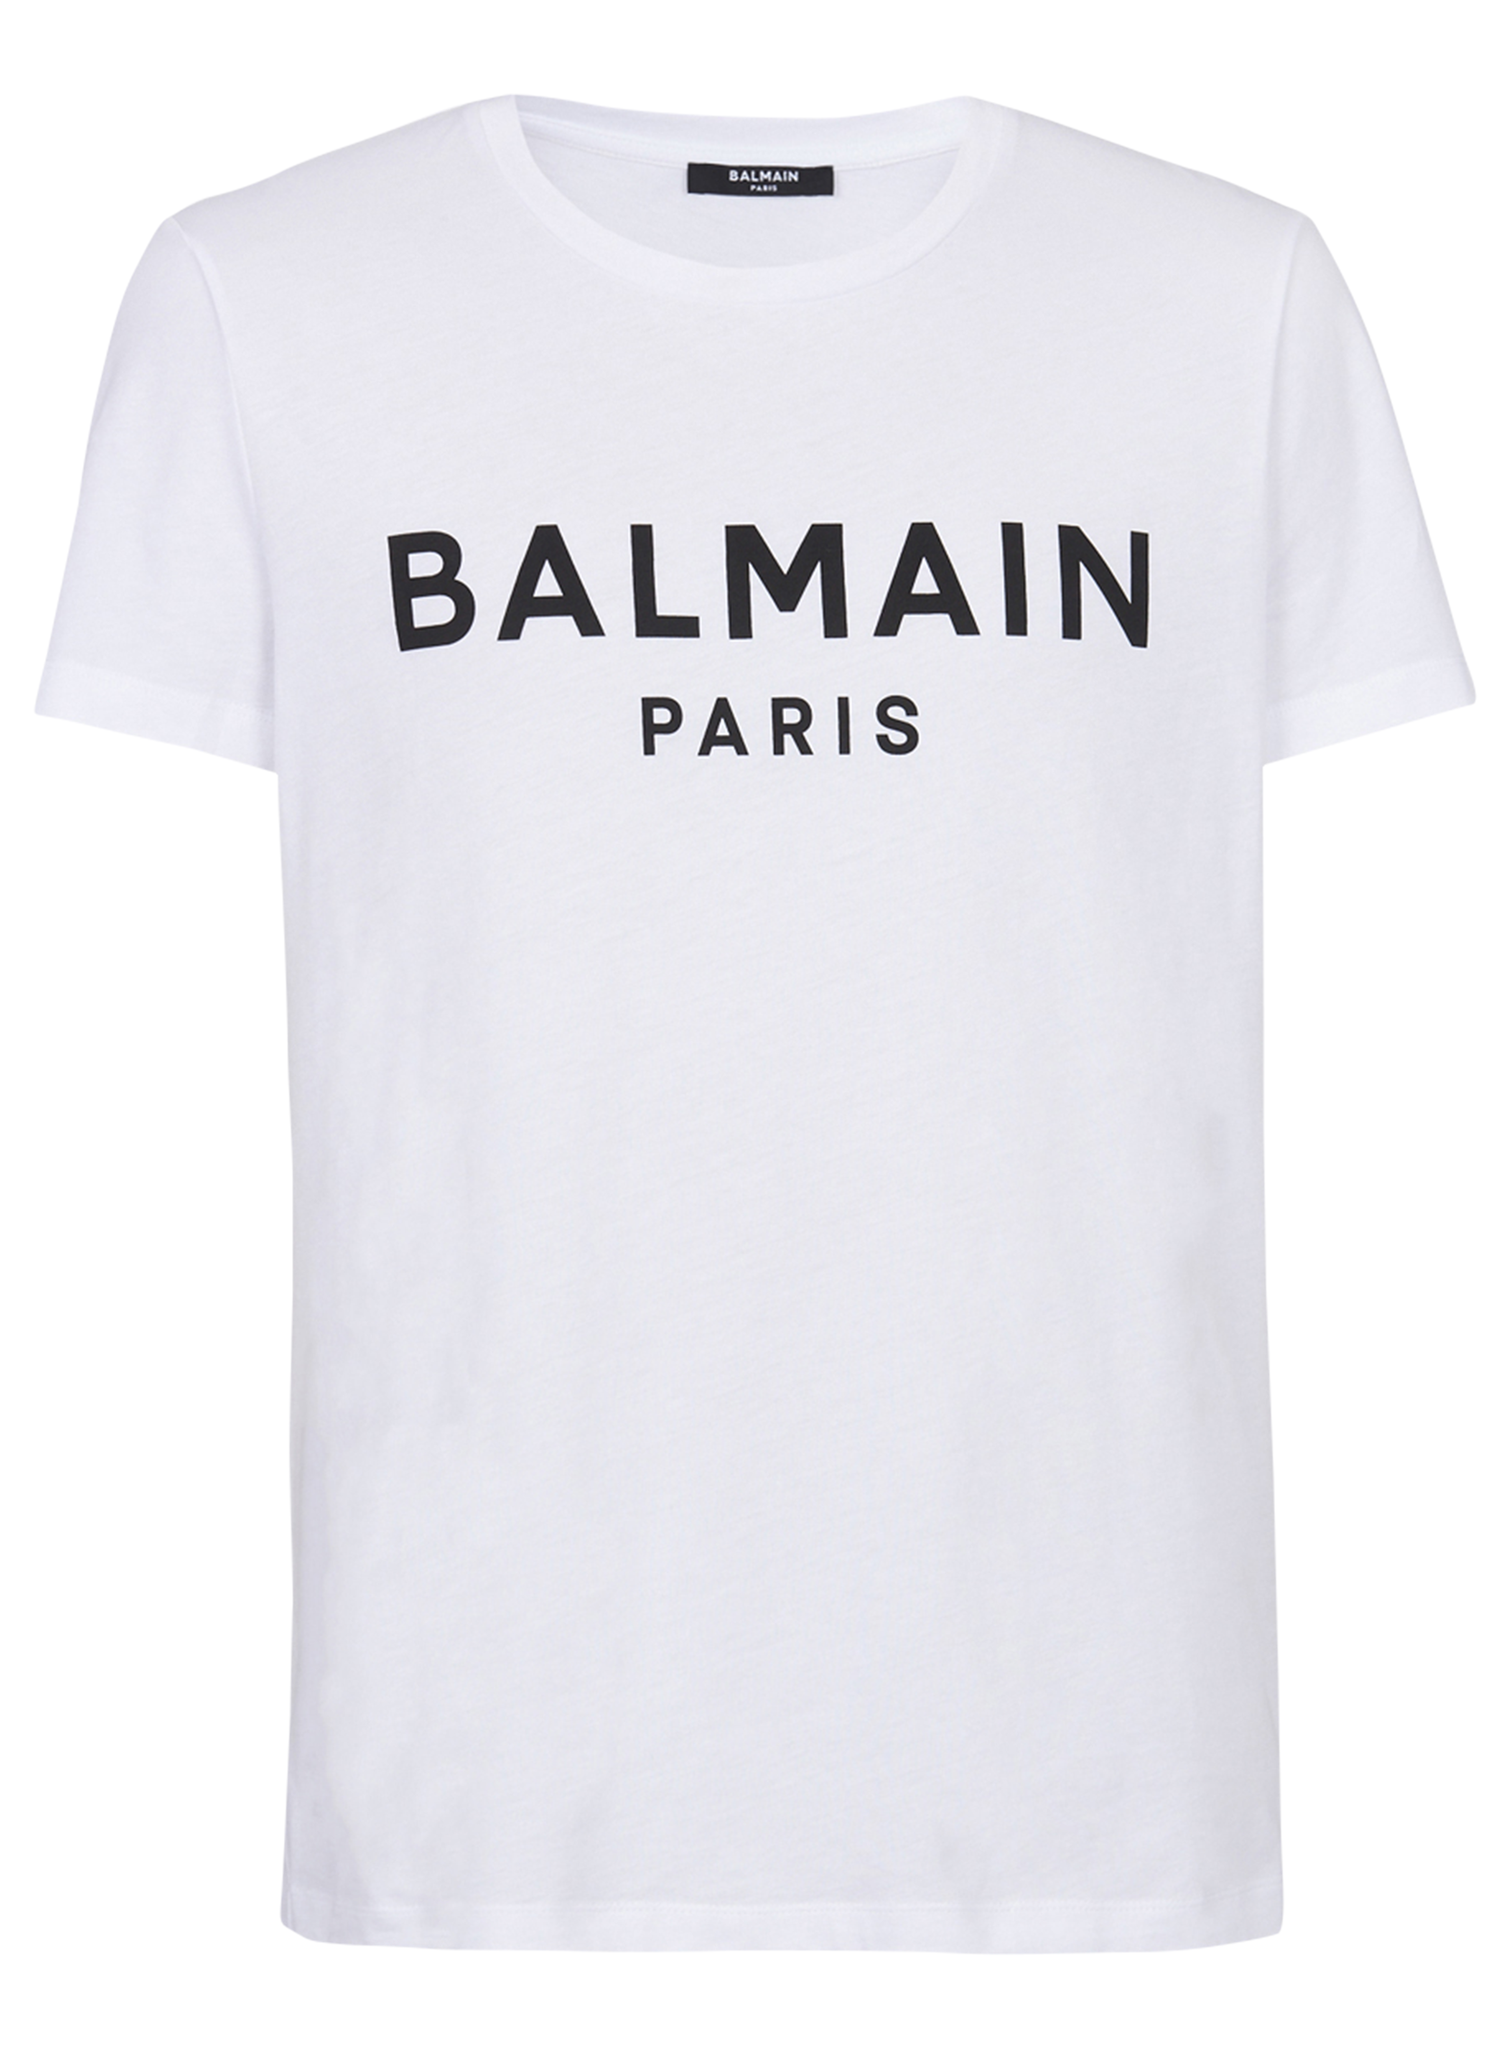 BALMAIN PRINTED T-SHIRT CLASSIC FIT - BLANC/NOIR